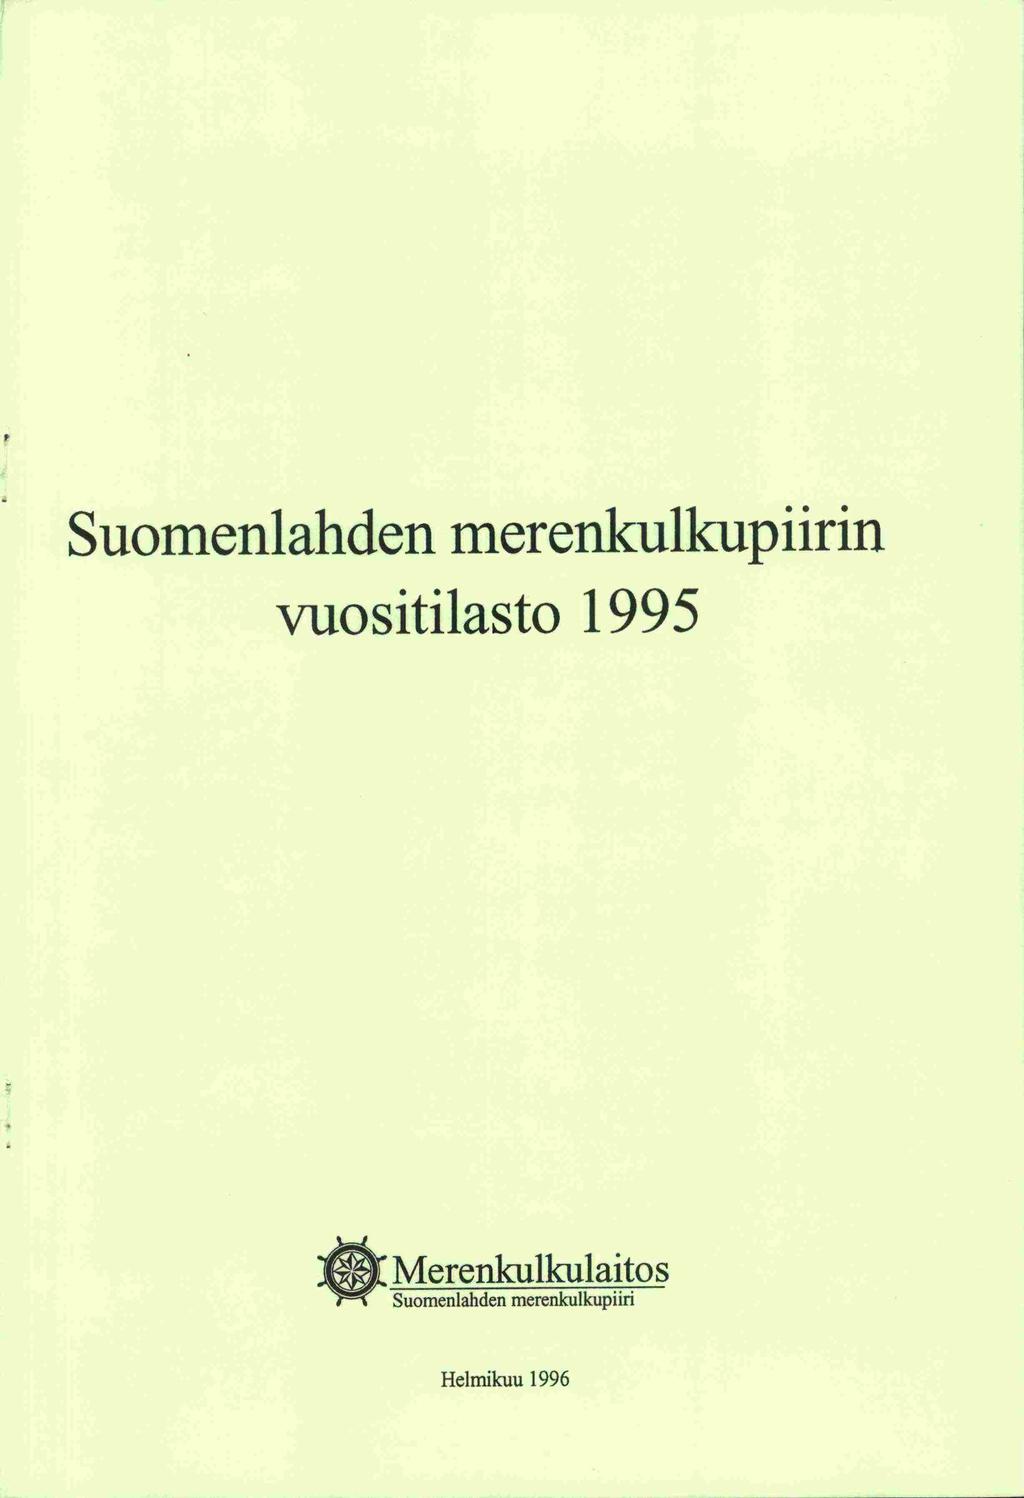 Suomenlanden merenkulkup i inn vuositilasto 1995